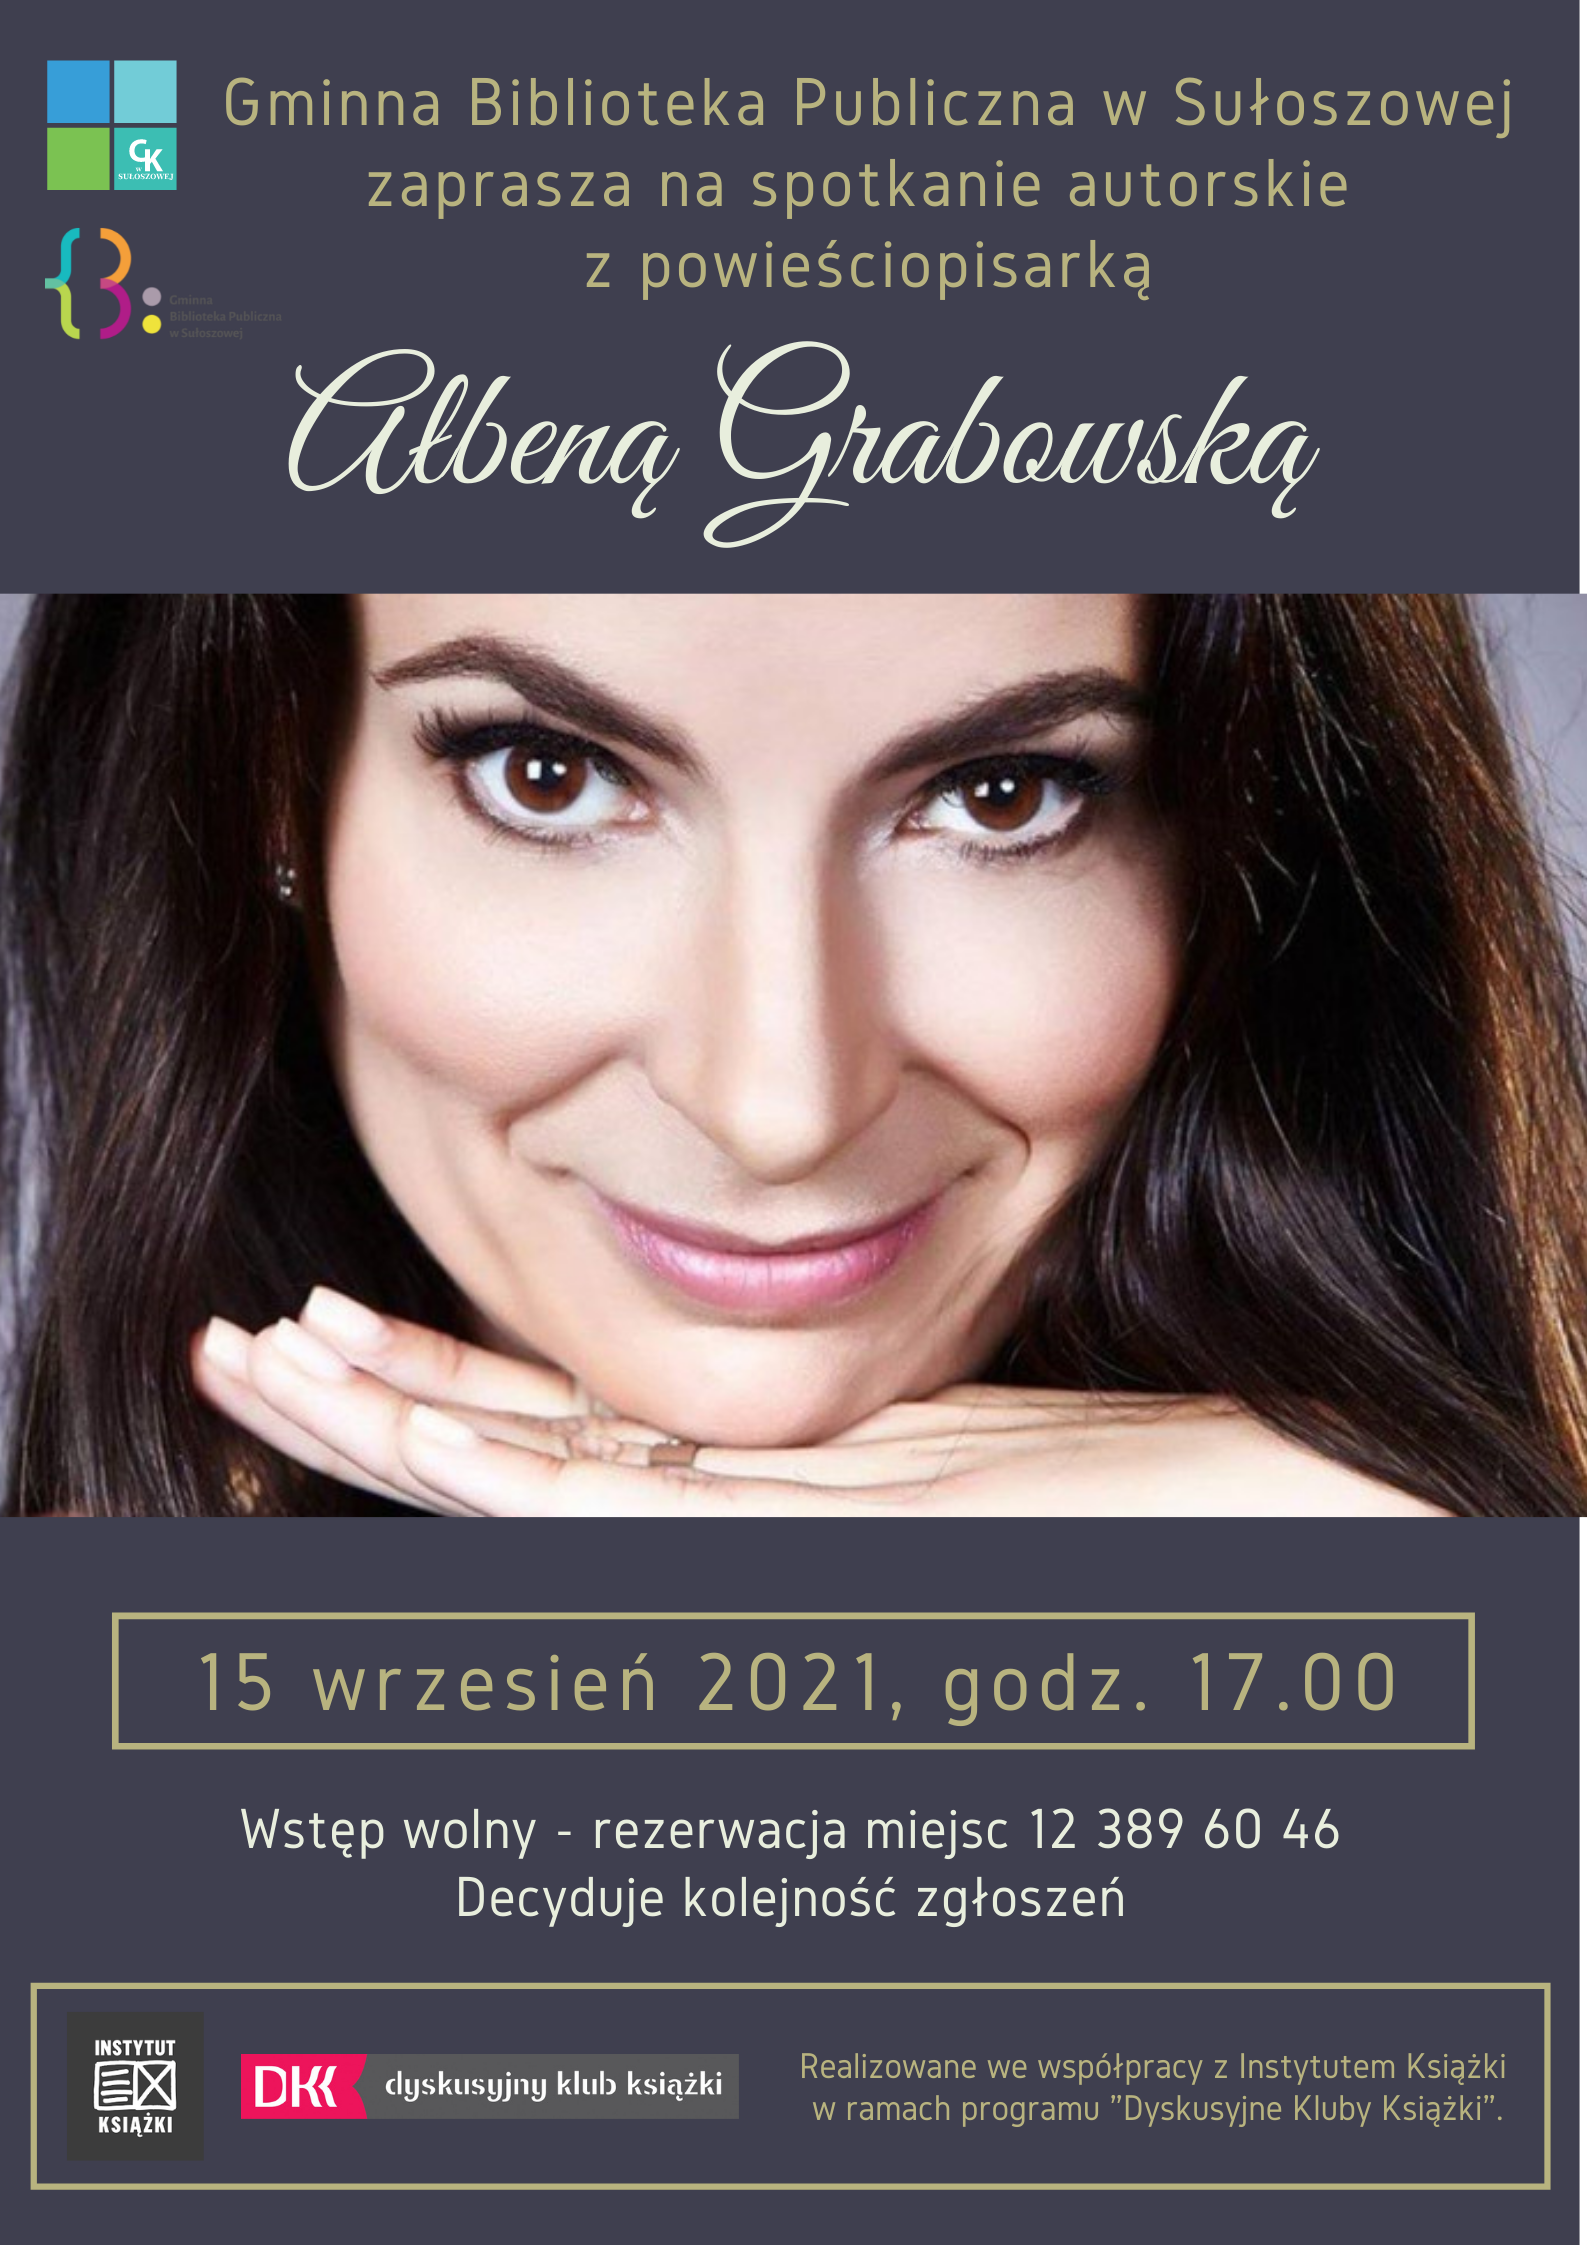 Spotkanie autorskie Ałbena Grabowska - plakat